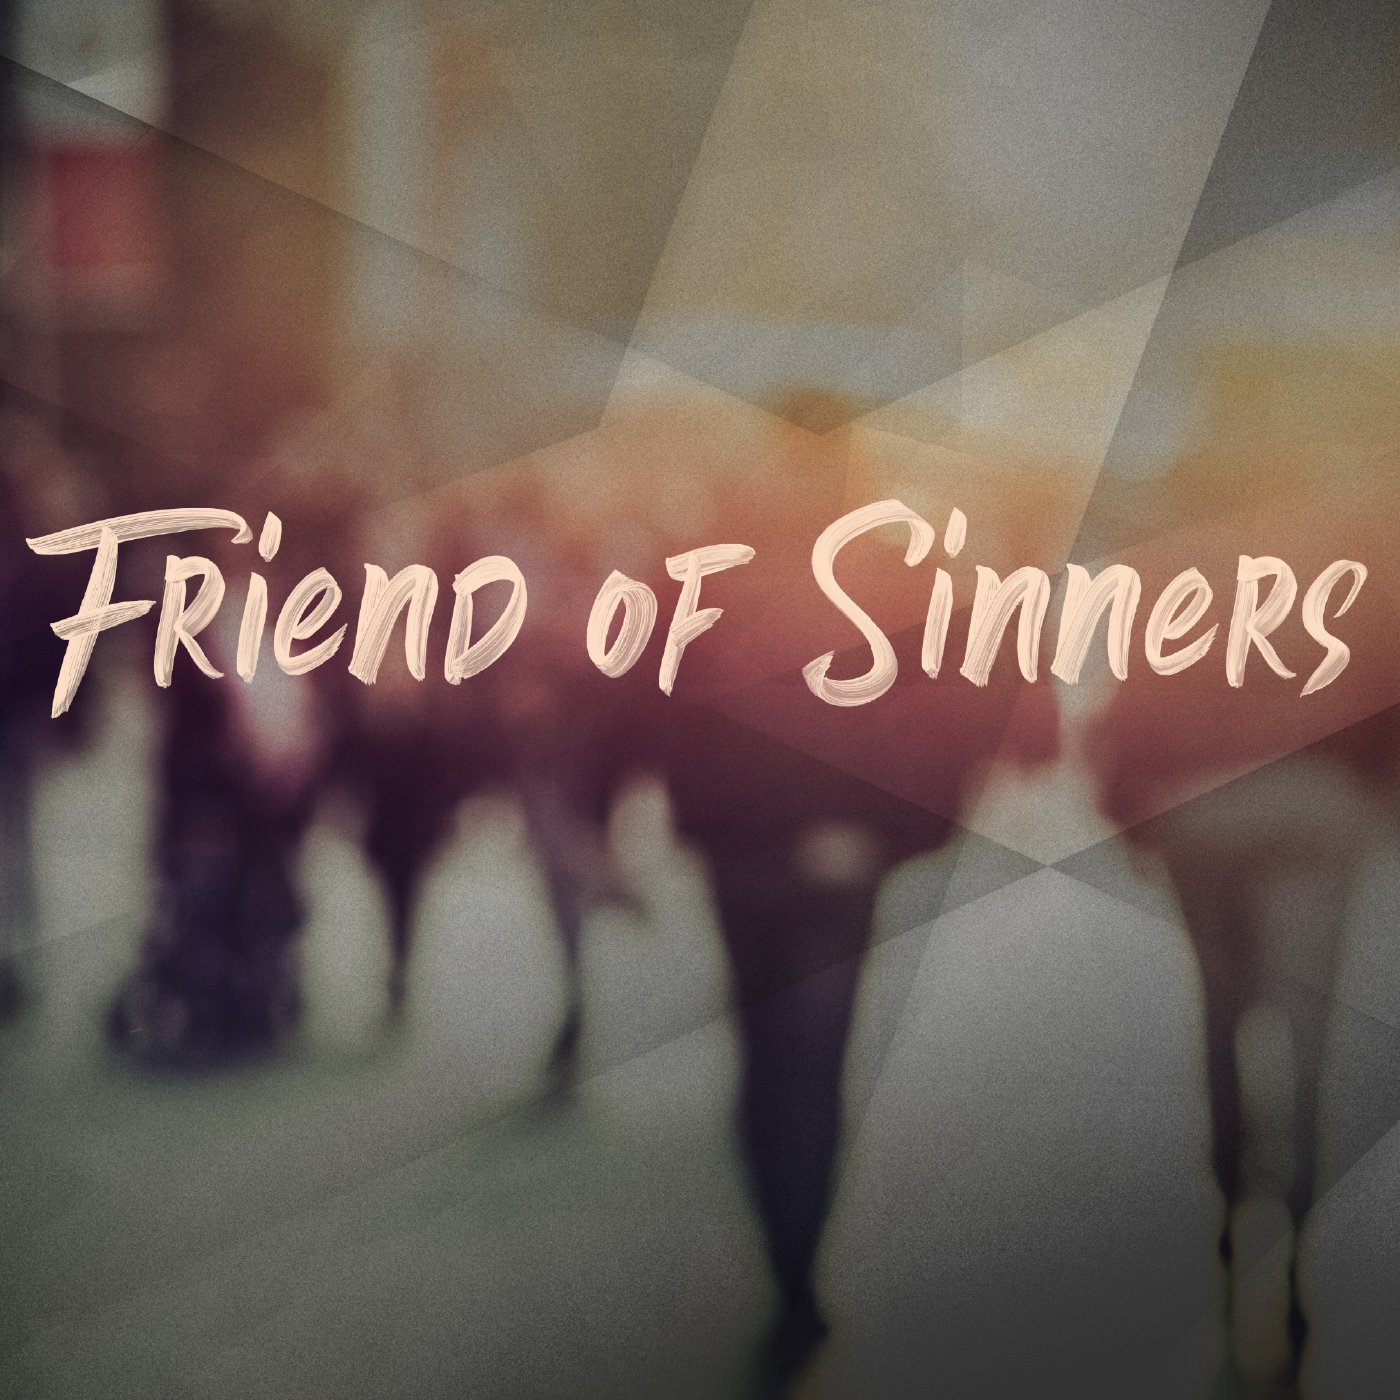 Friend of Sinners, Part 7